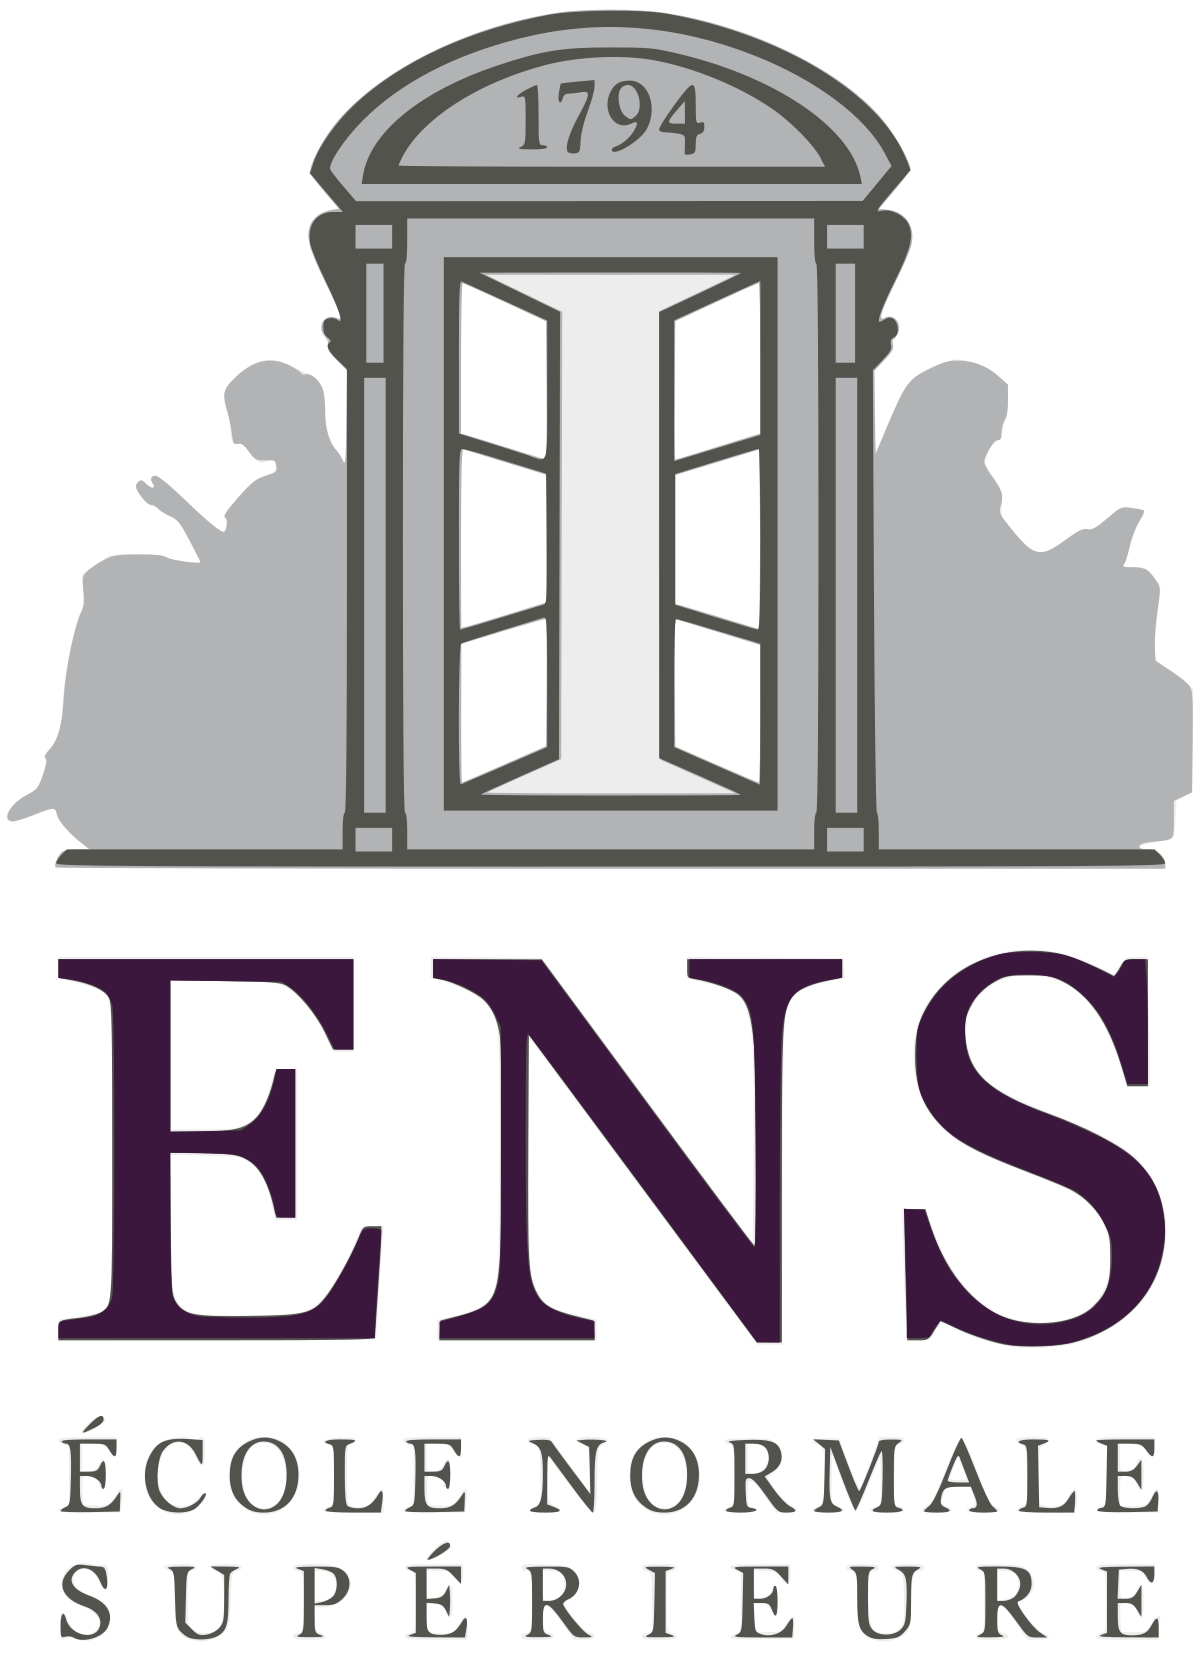 Logotype de E n s